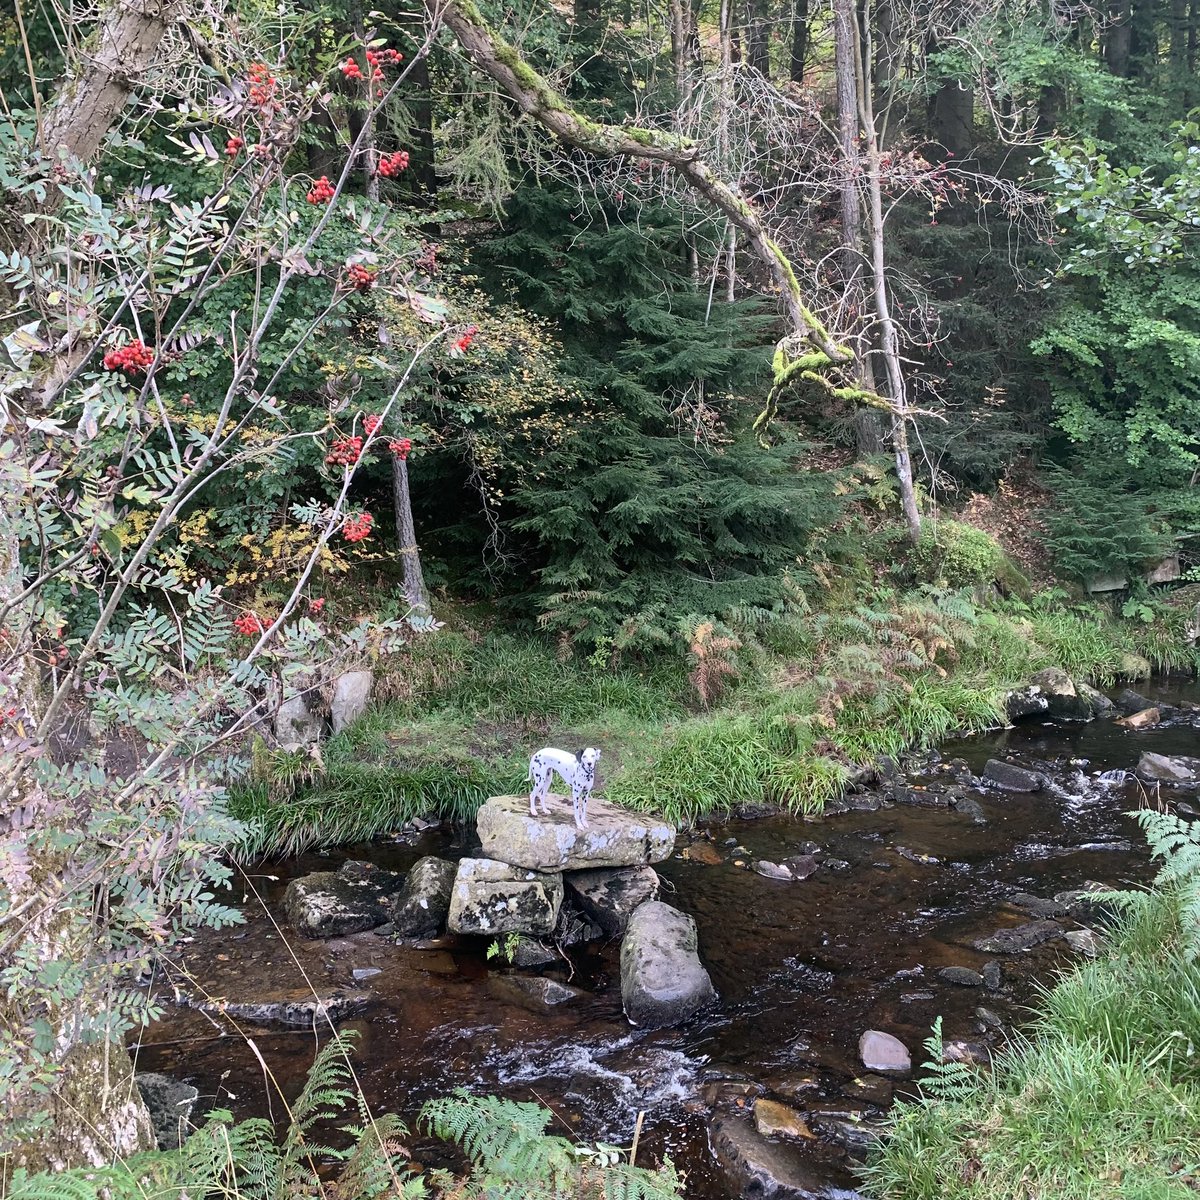 Cora @ #hamsterleyforest 

#corathedalmatian @ForestryEngland #CountyDurham #forest #naturesplayground #NaturePhotography #dalmatian #dogsoftwitter #Autumn #autumncolours @VisitEngland